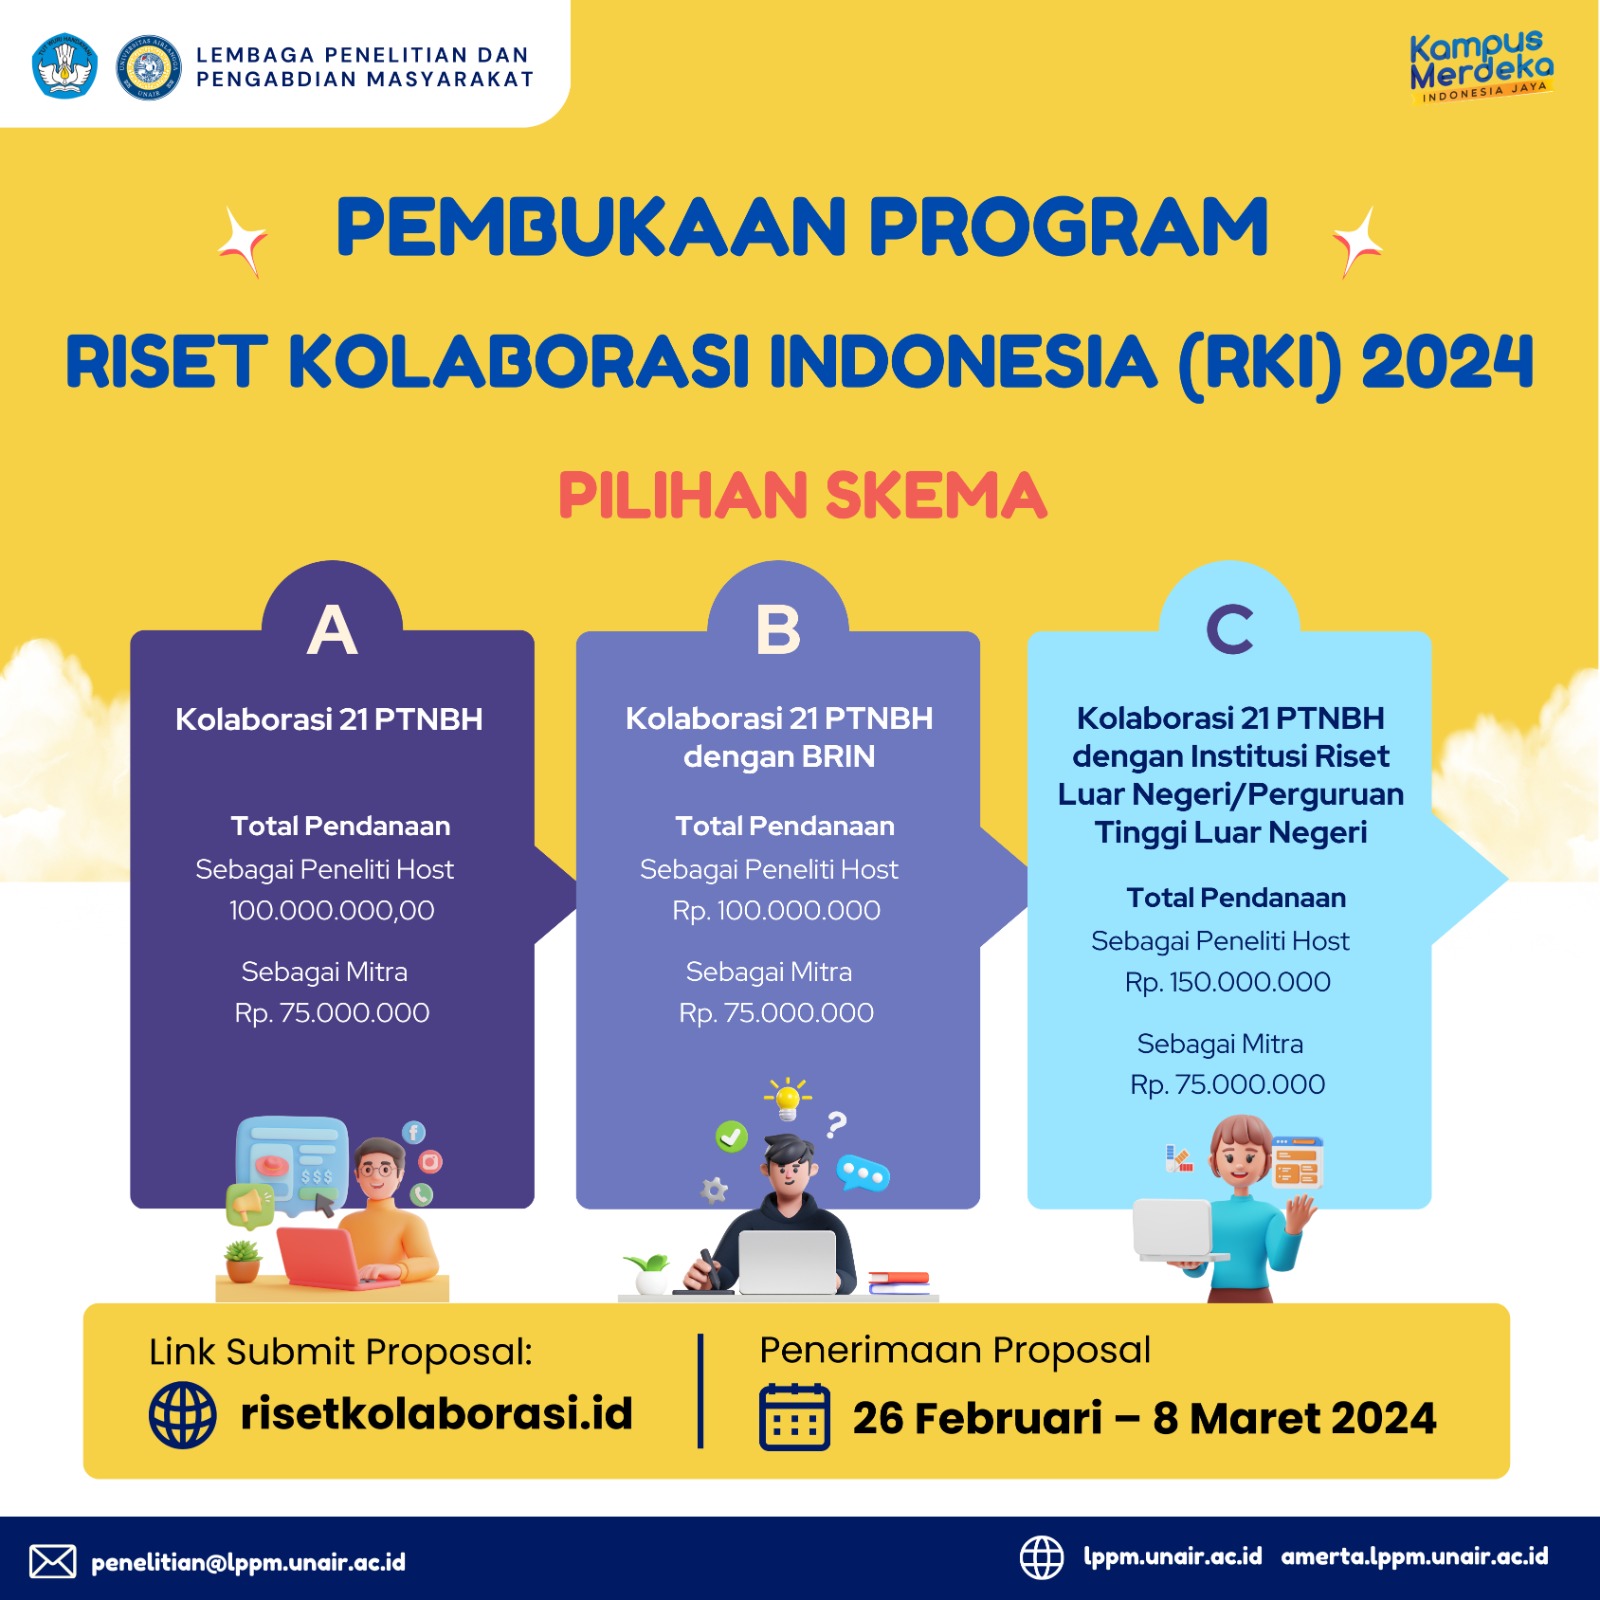 CALL FOR PROPOSAL RISET KOLABORASI INDONESIA - RKI TAHUN 2024